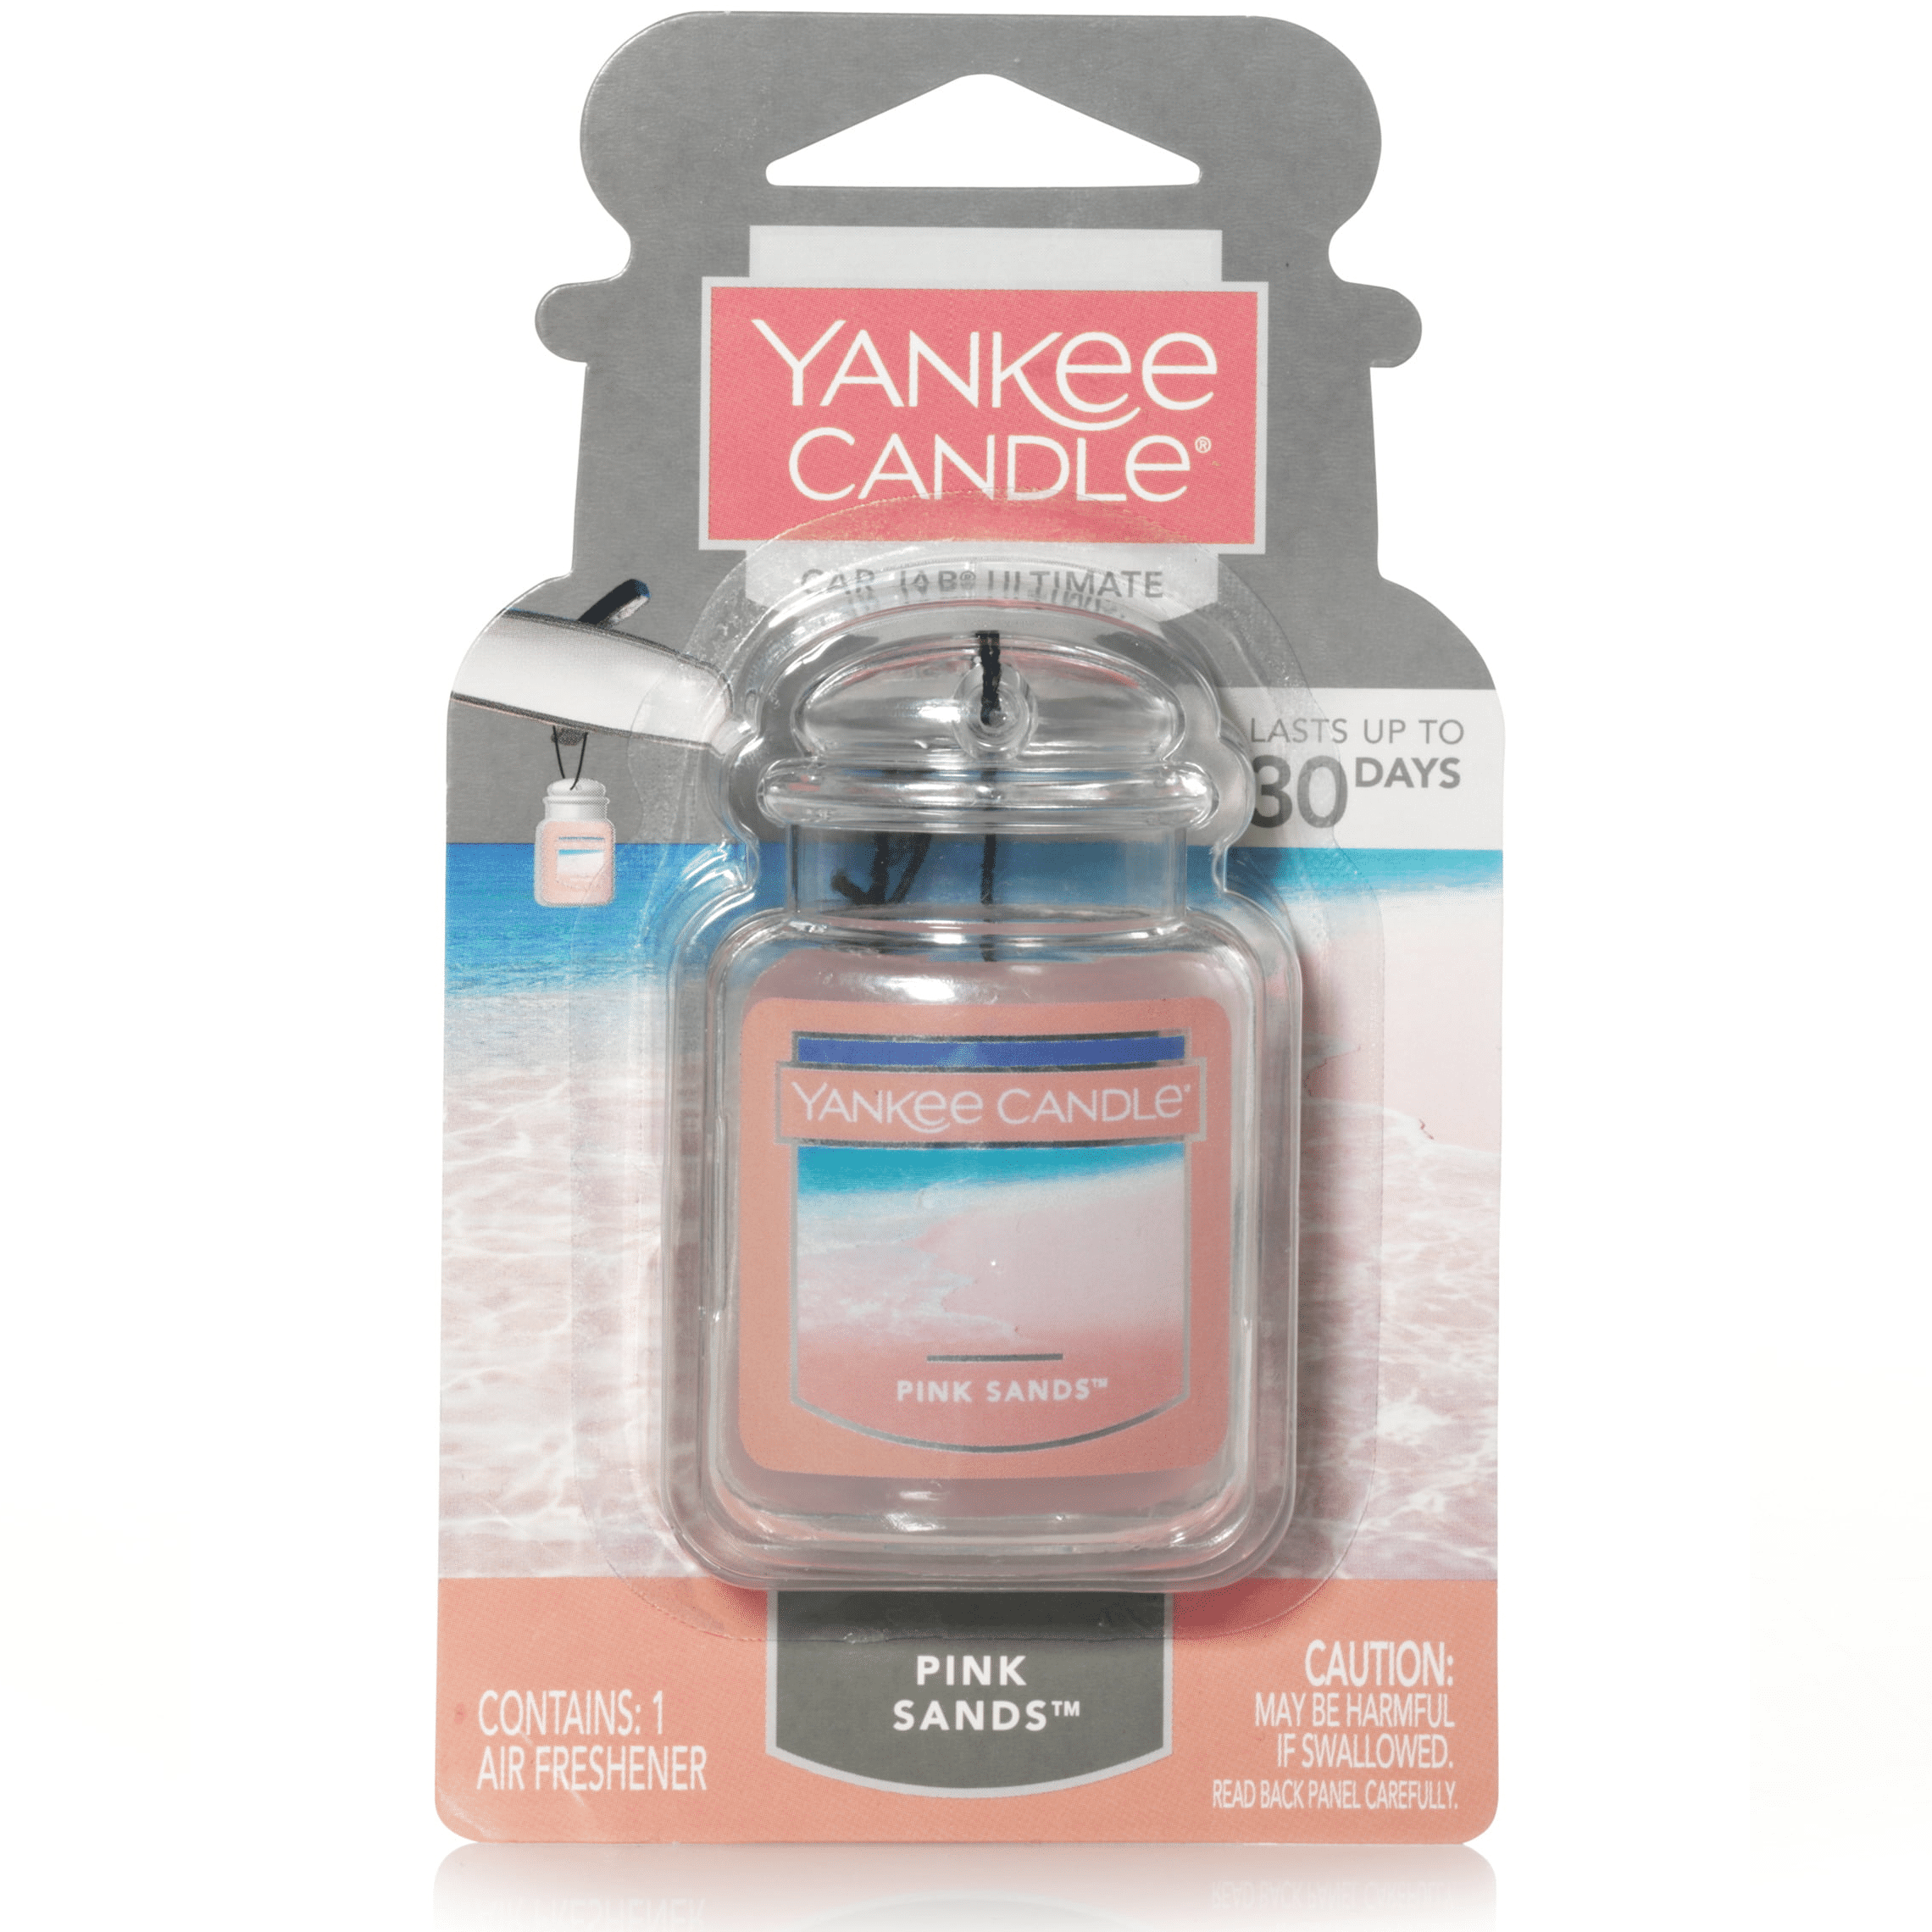 Yankee Candle Car Jar Ultimate Air Freshener, Pink Sands